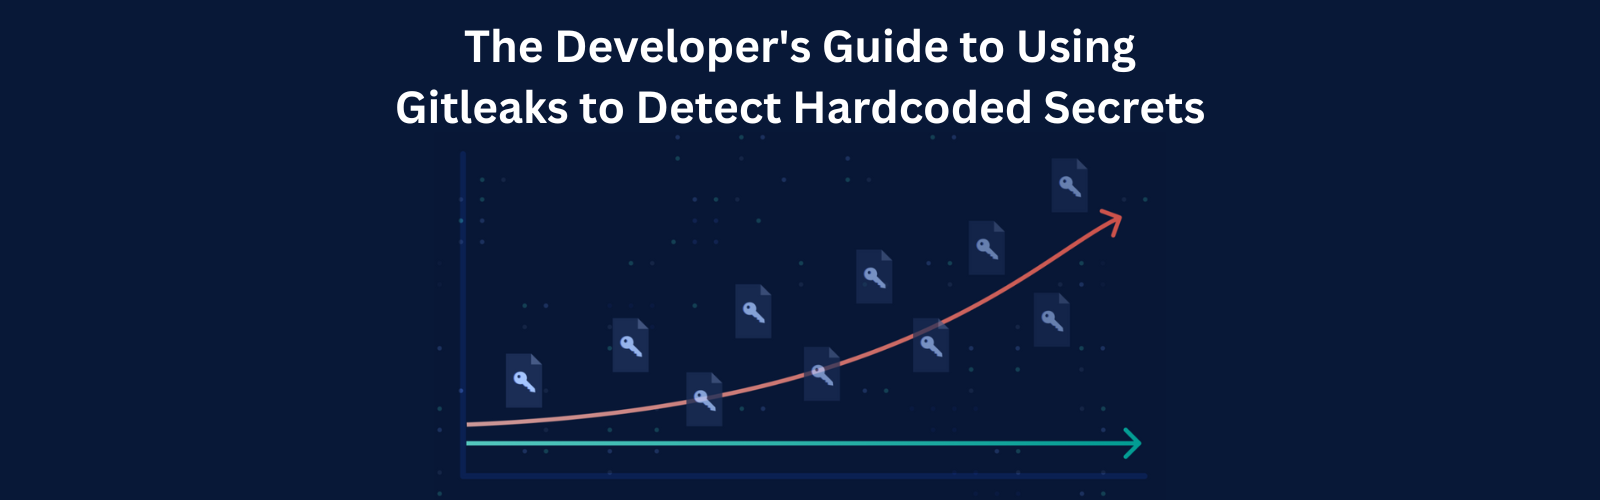 The Developer's Guide to Using Gitleaks to Detect Hardcoded Secrets main image